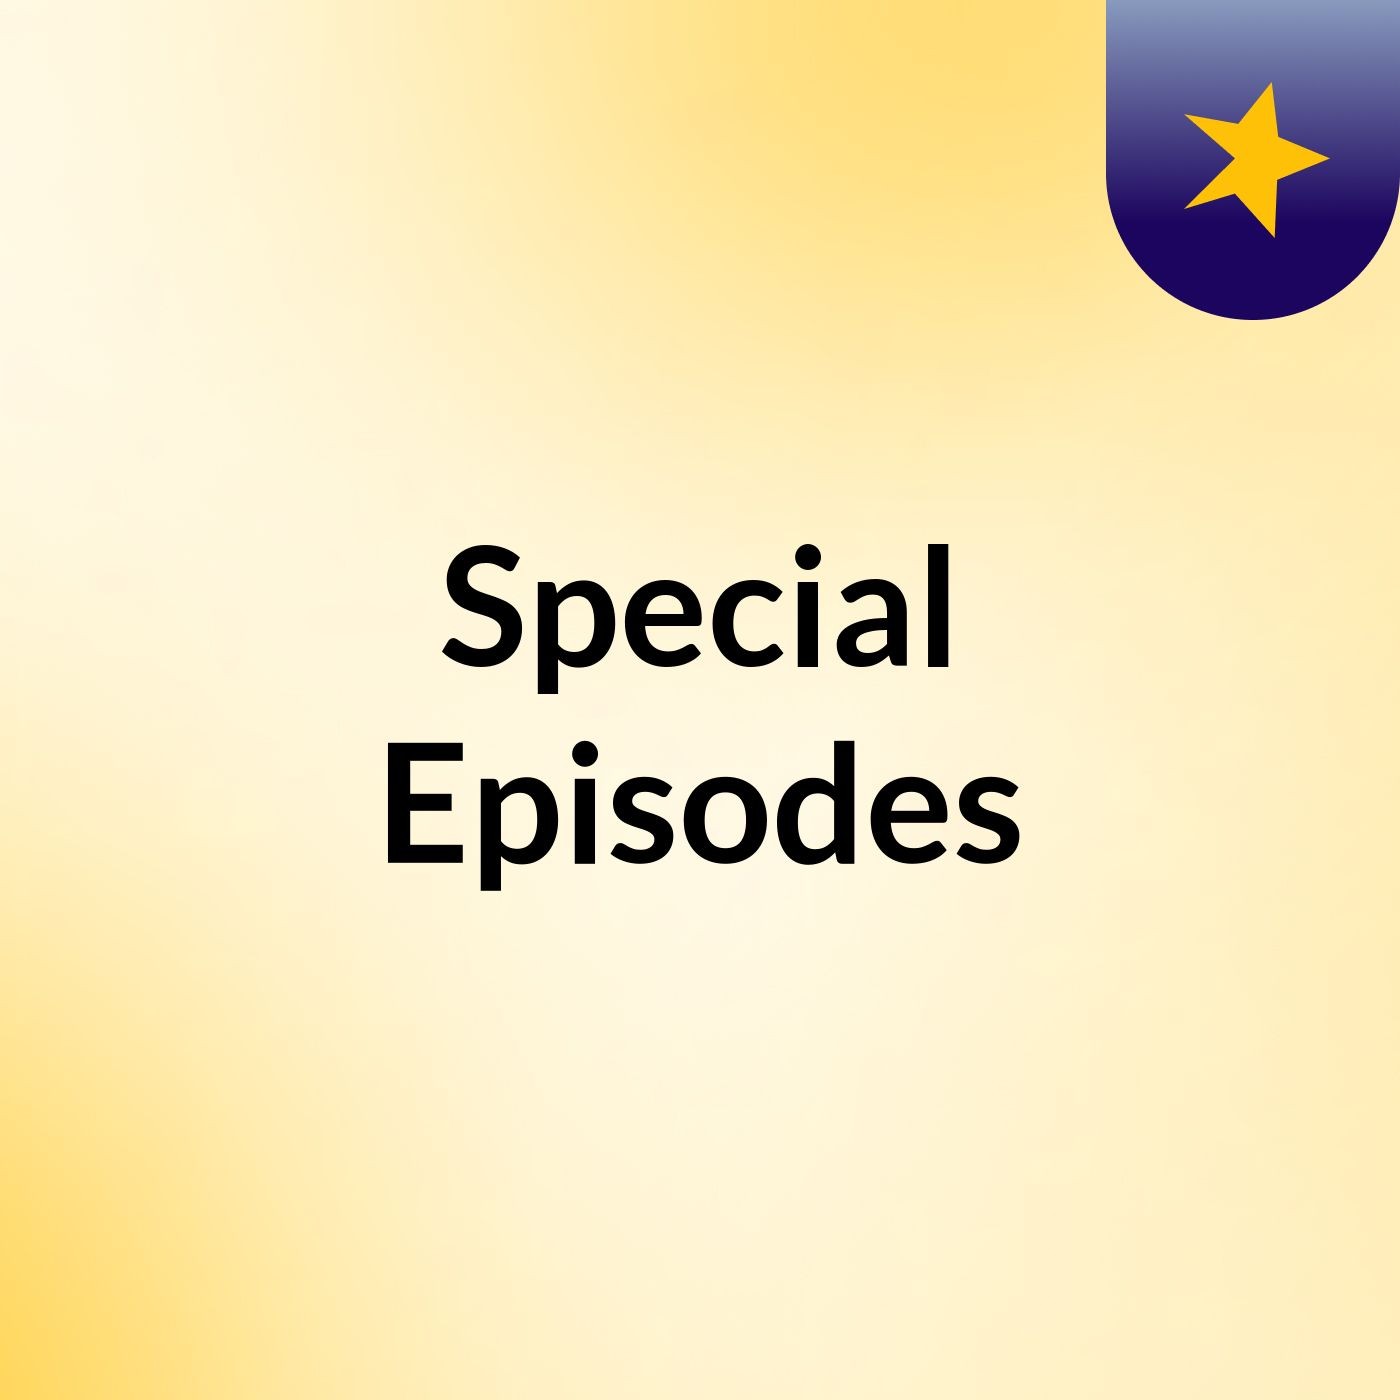 Special Episodes